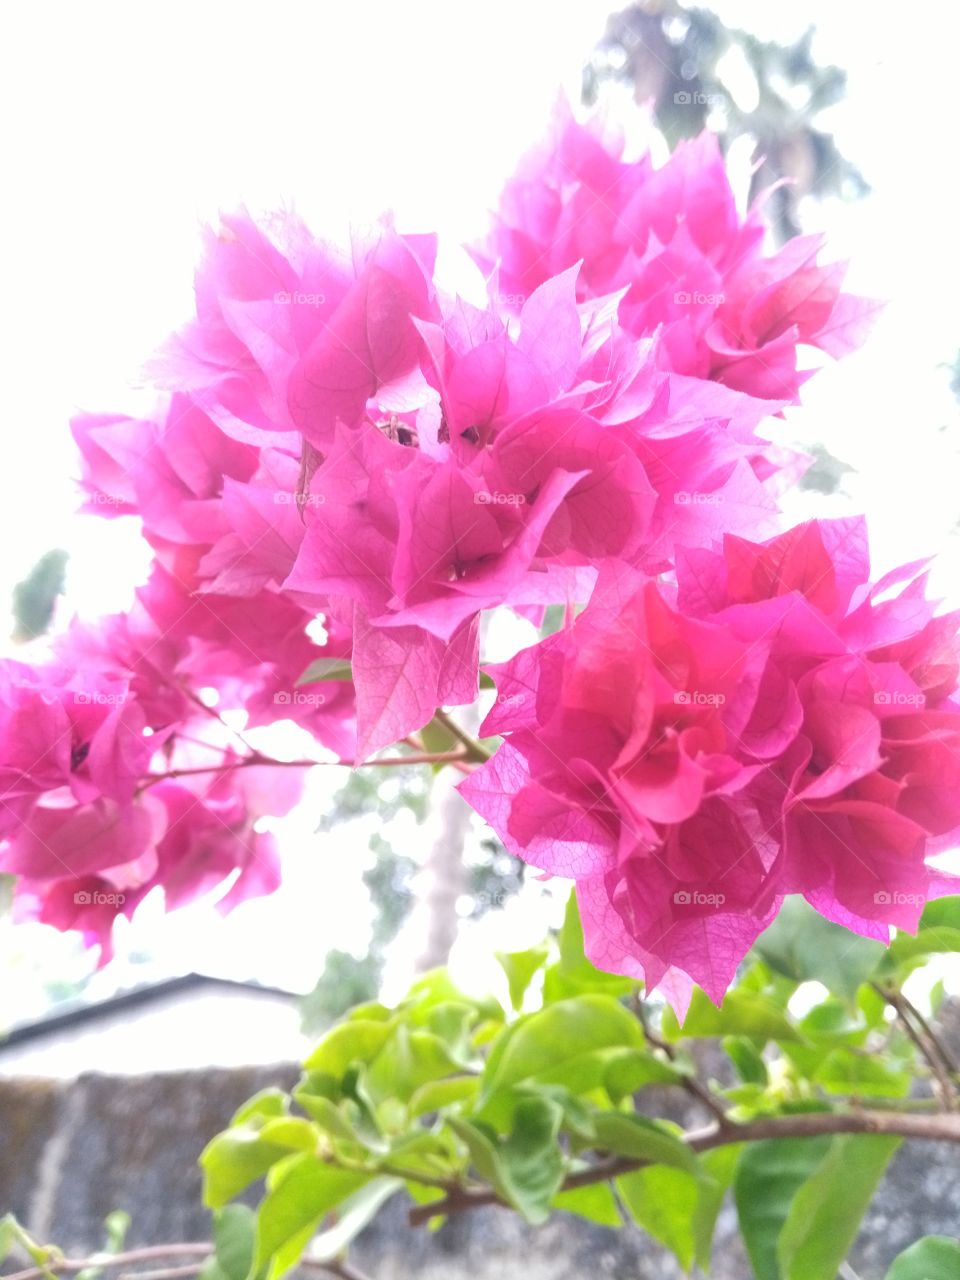 Verry beautifull Rose flowers .nature rose  colour .garden flowers